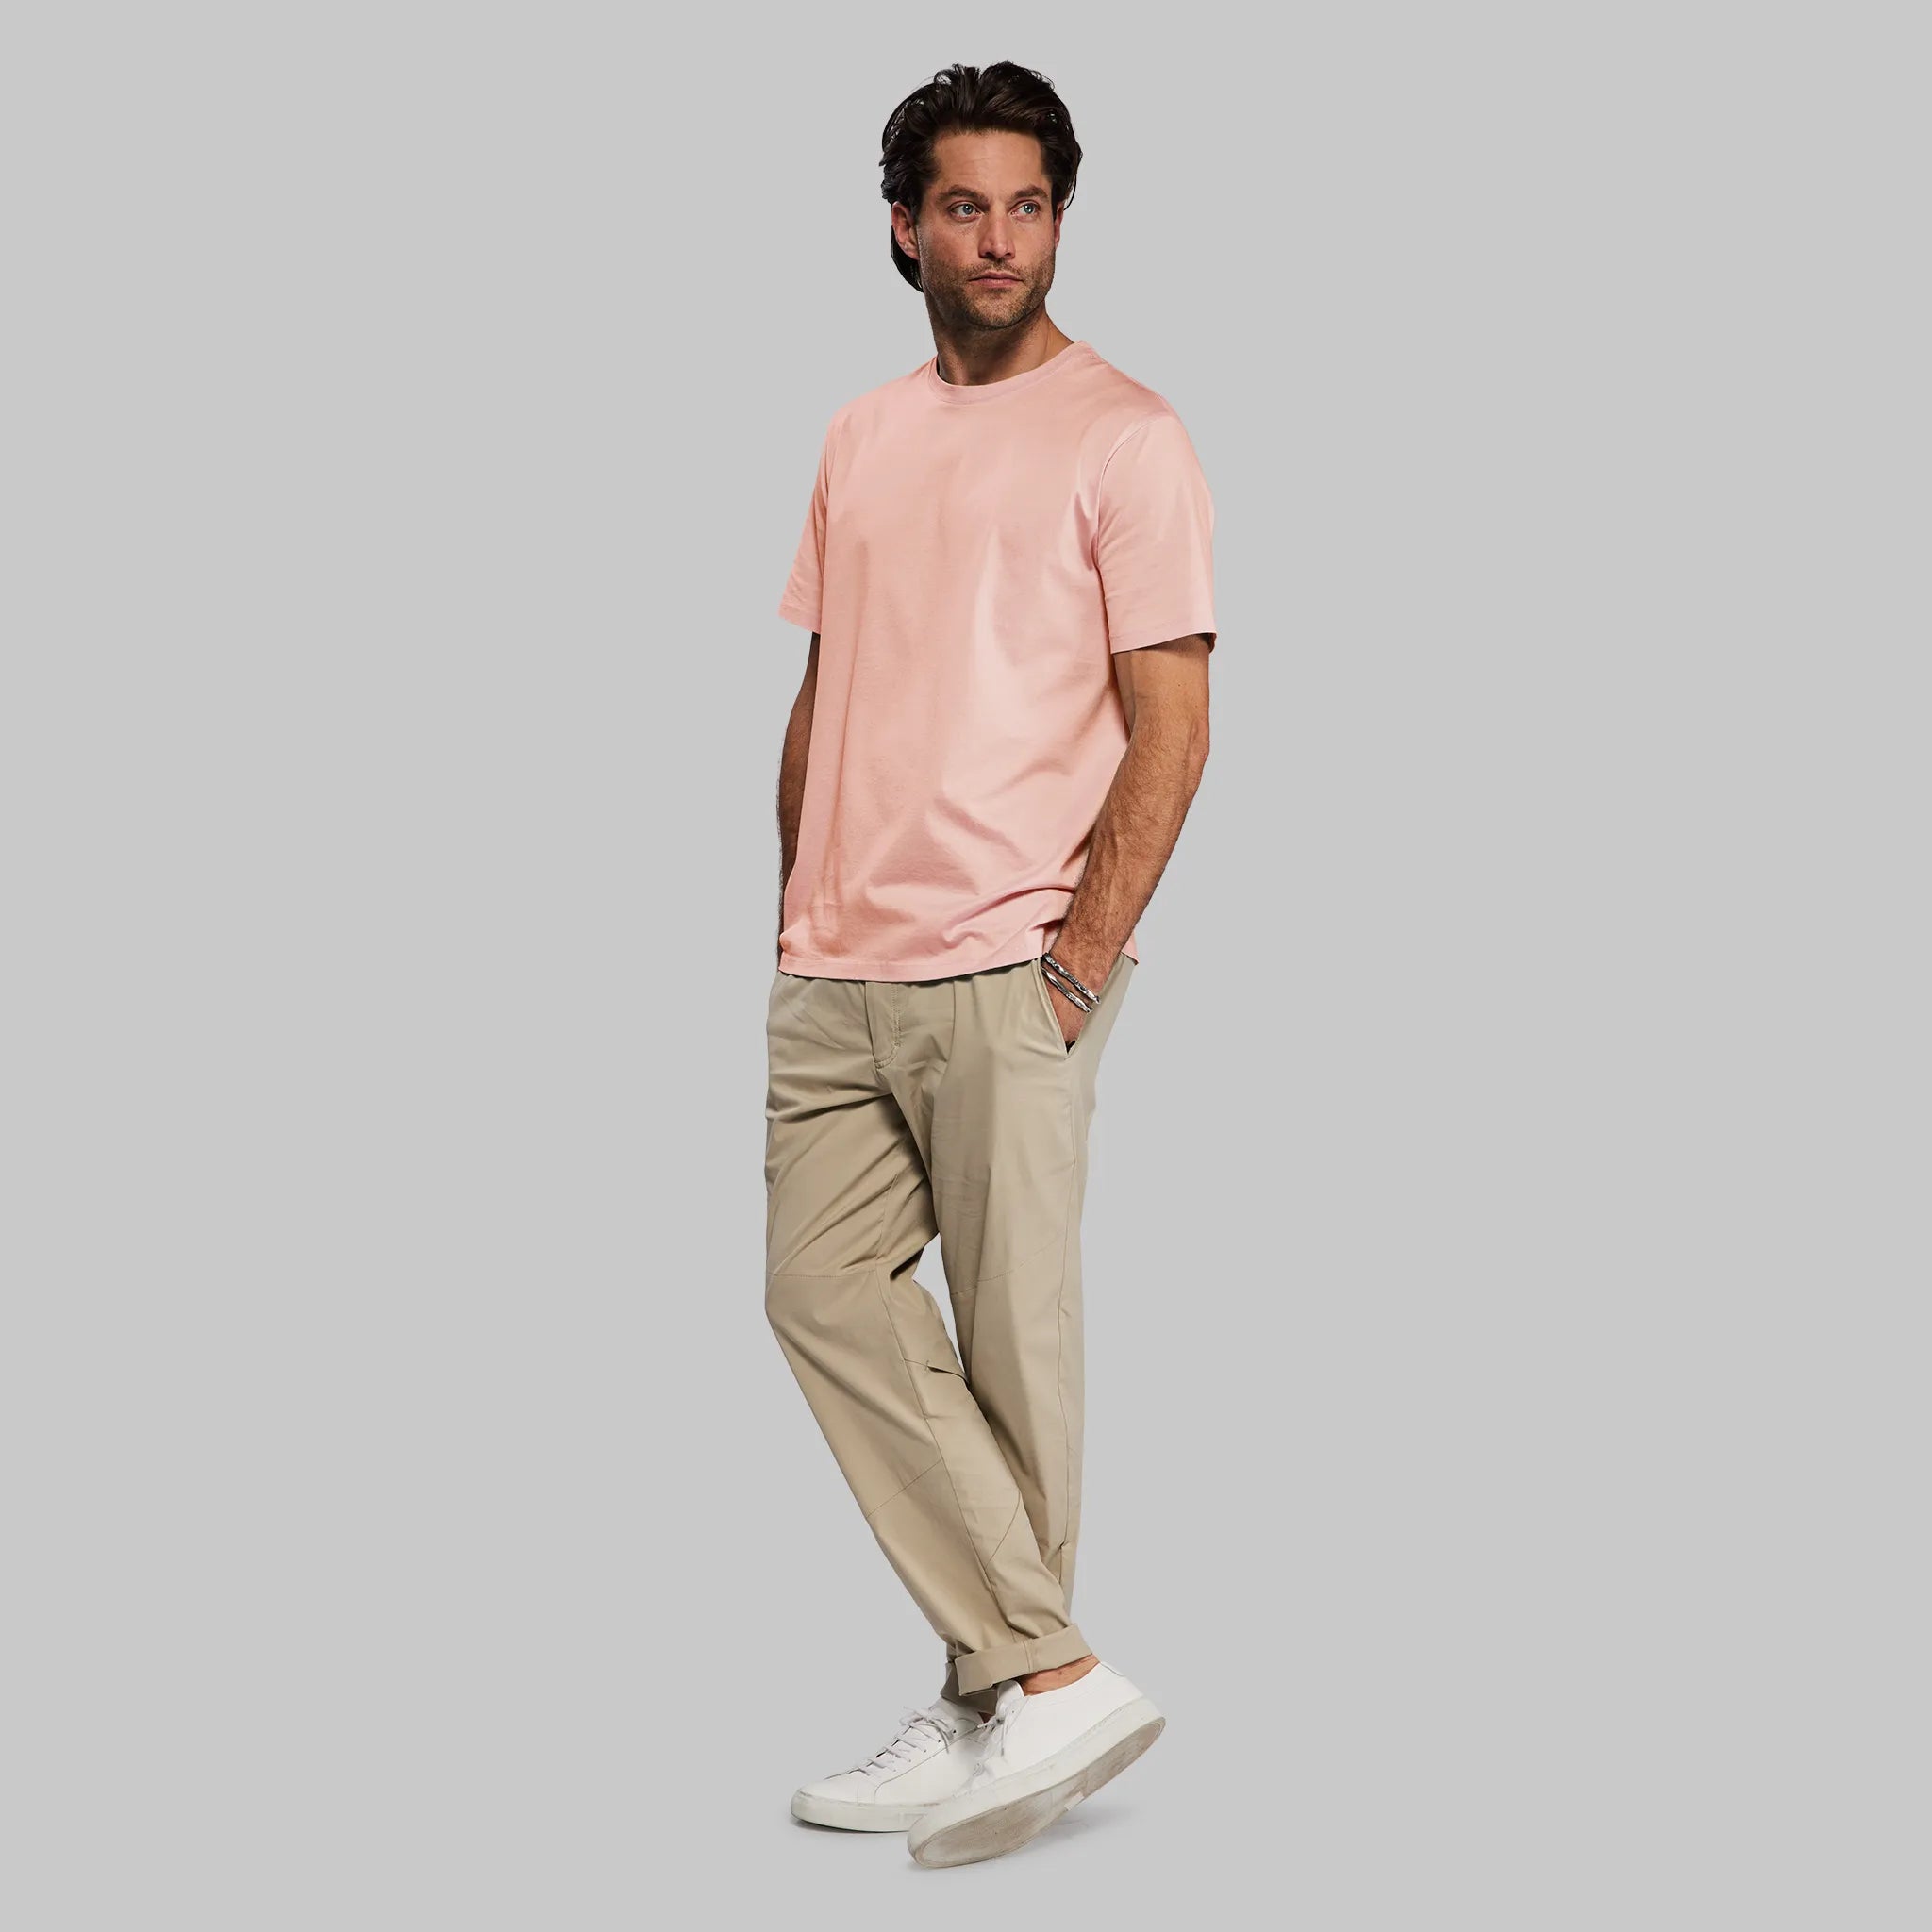 Equator T Shirt. Coral Pink edition